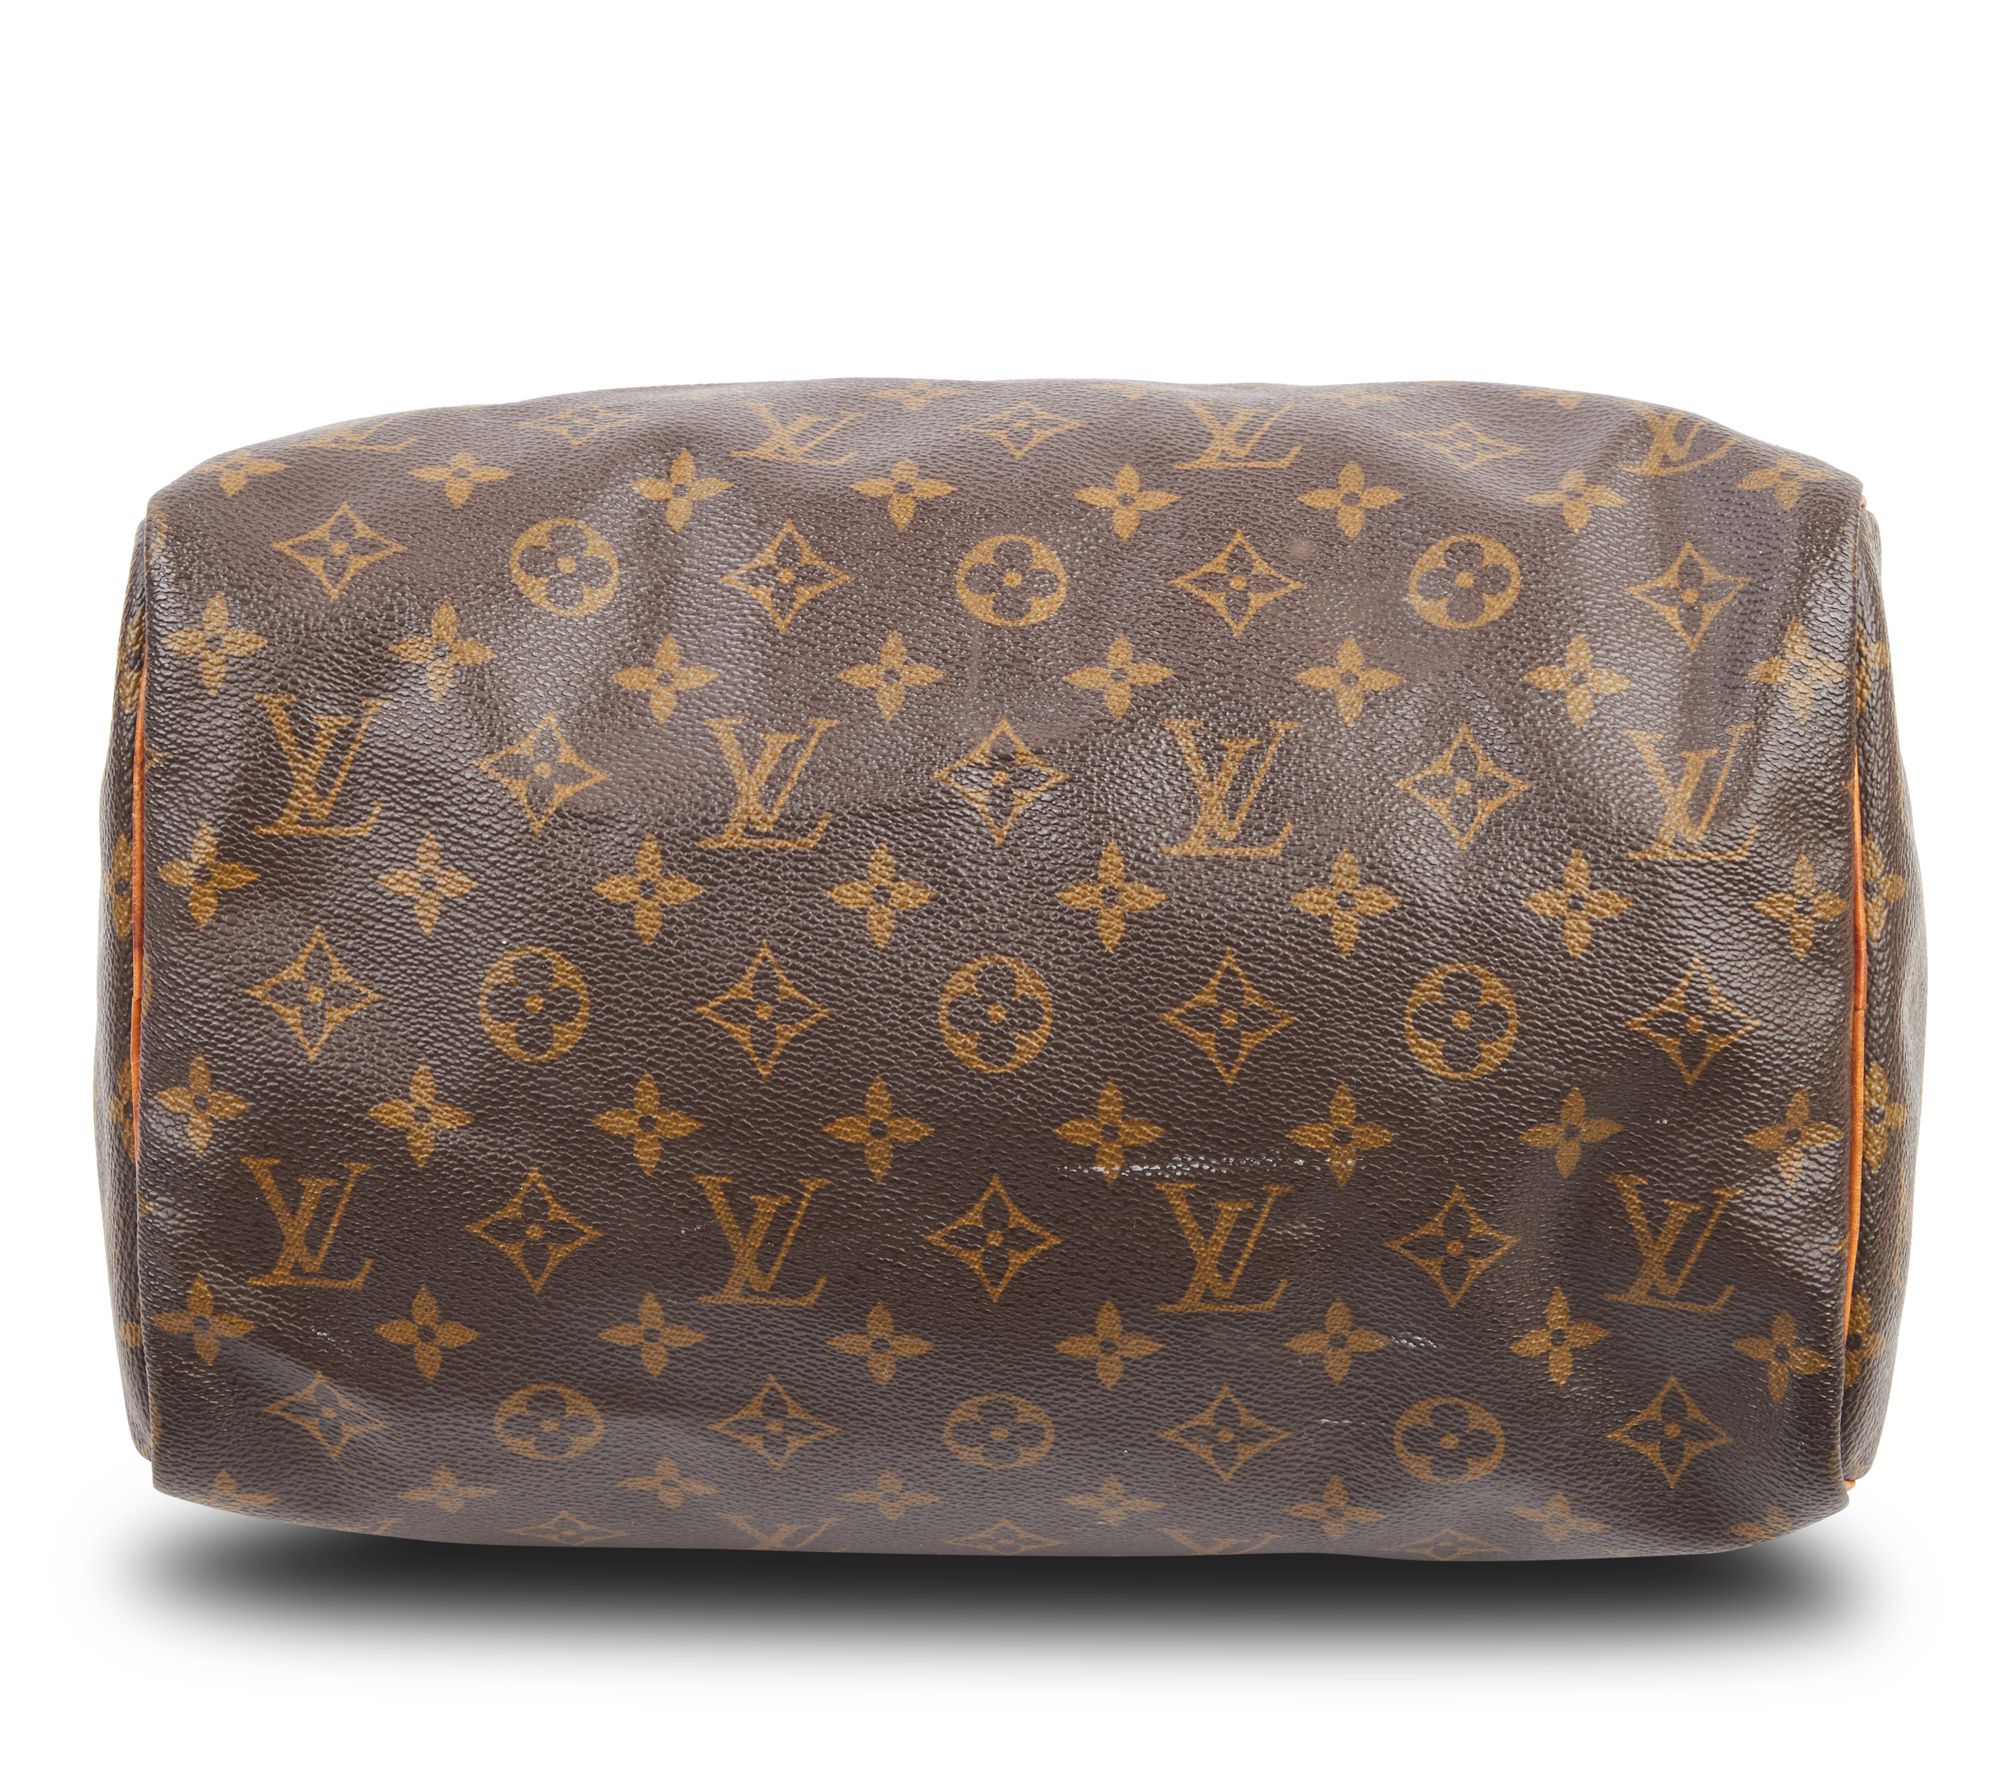 Louis Vuitton Logo Stencil Brand Handbag, 30, text, service